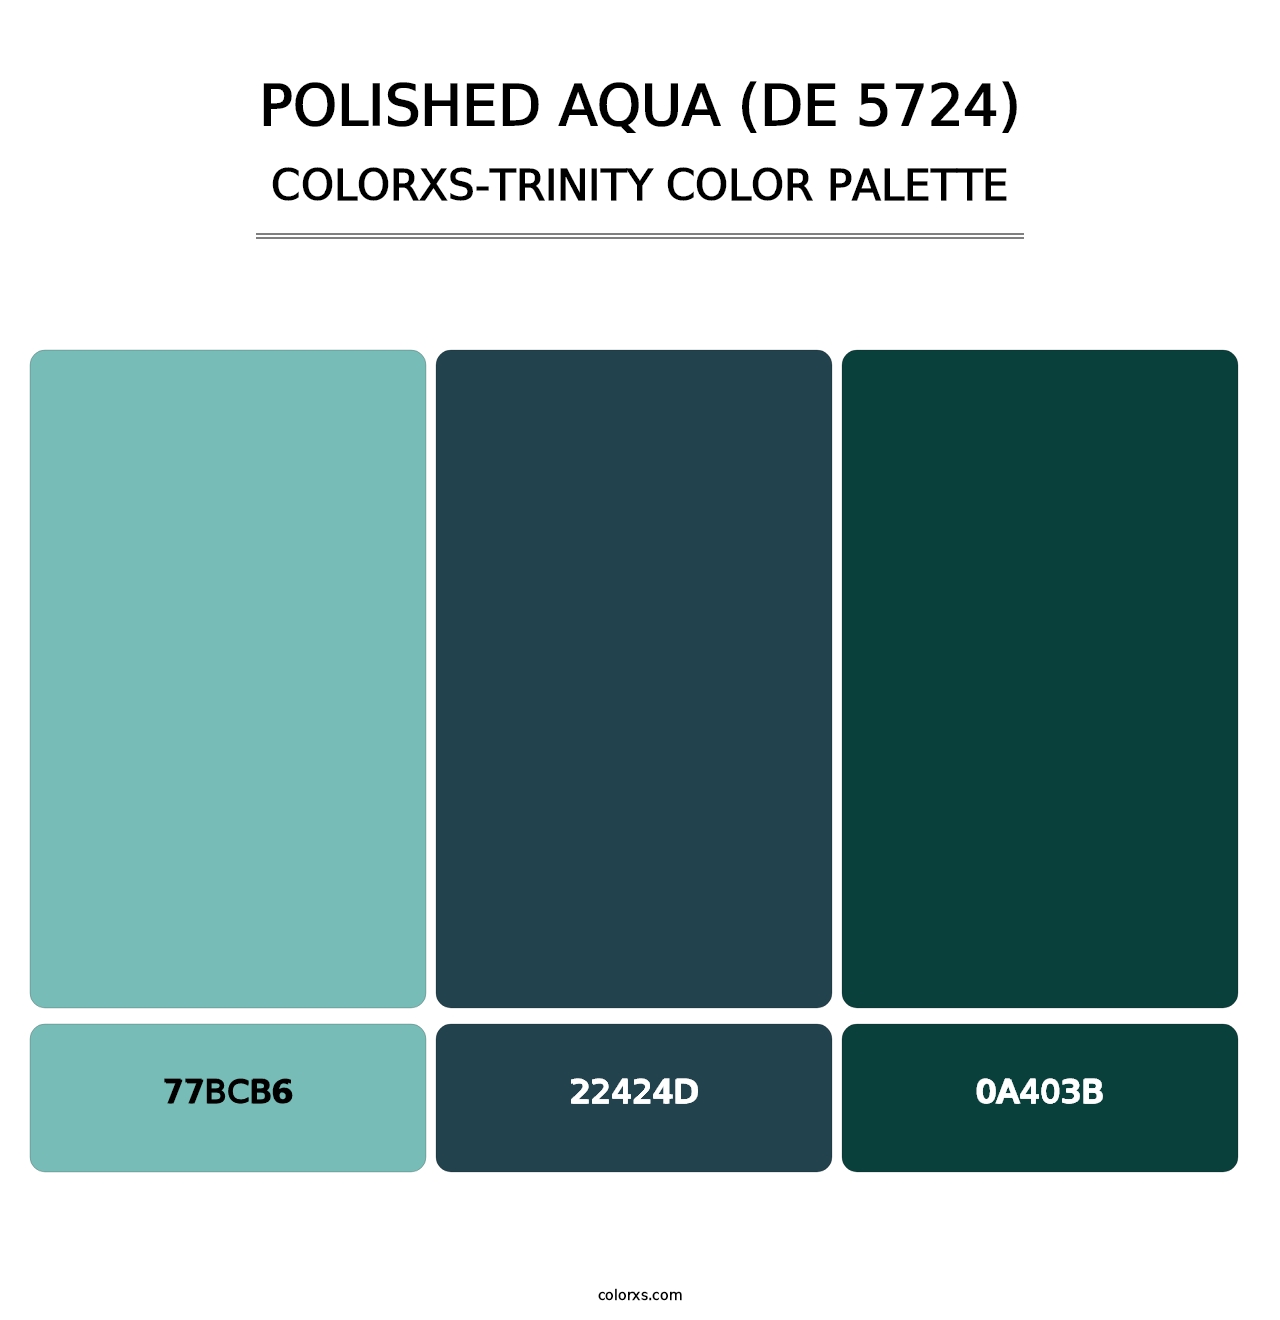 Polished Aqua (DE 5724) - Colorxs Trinity Palette